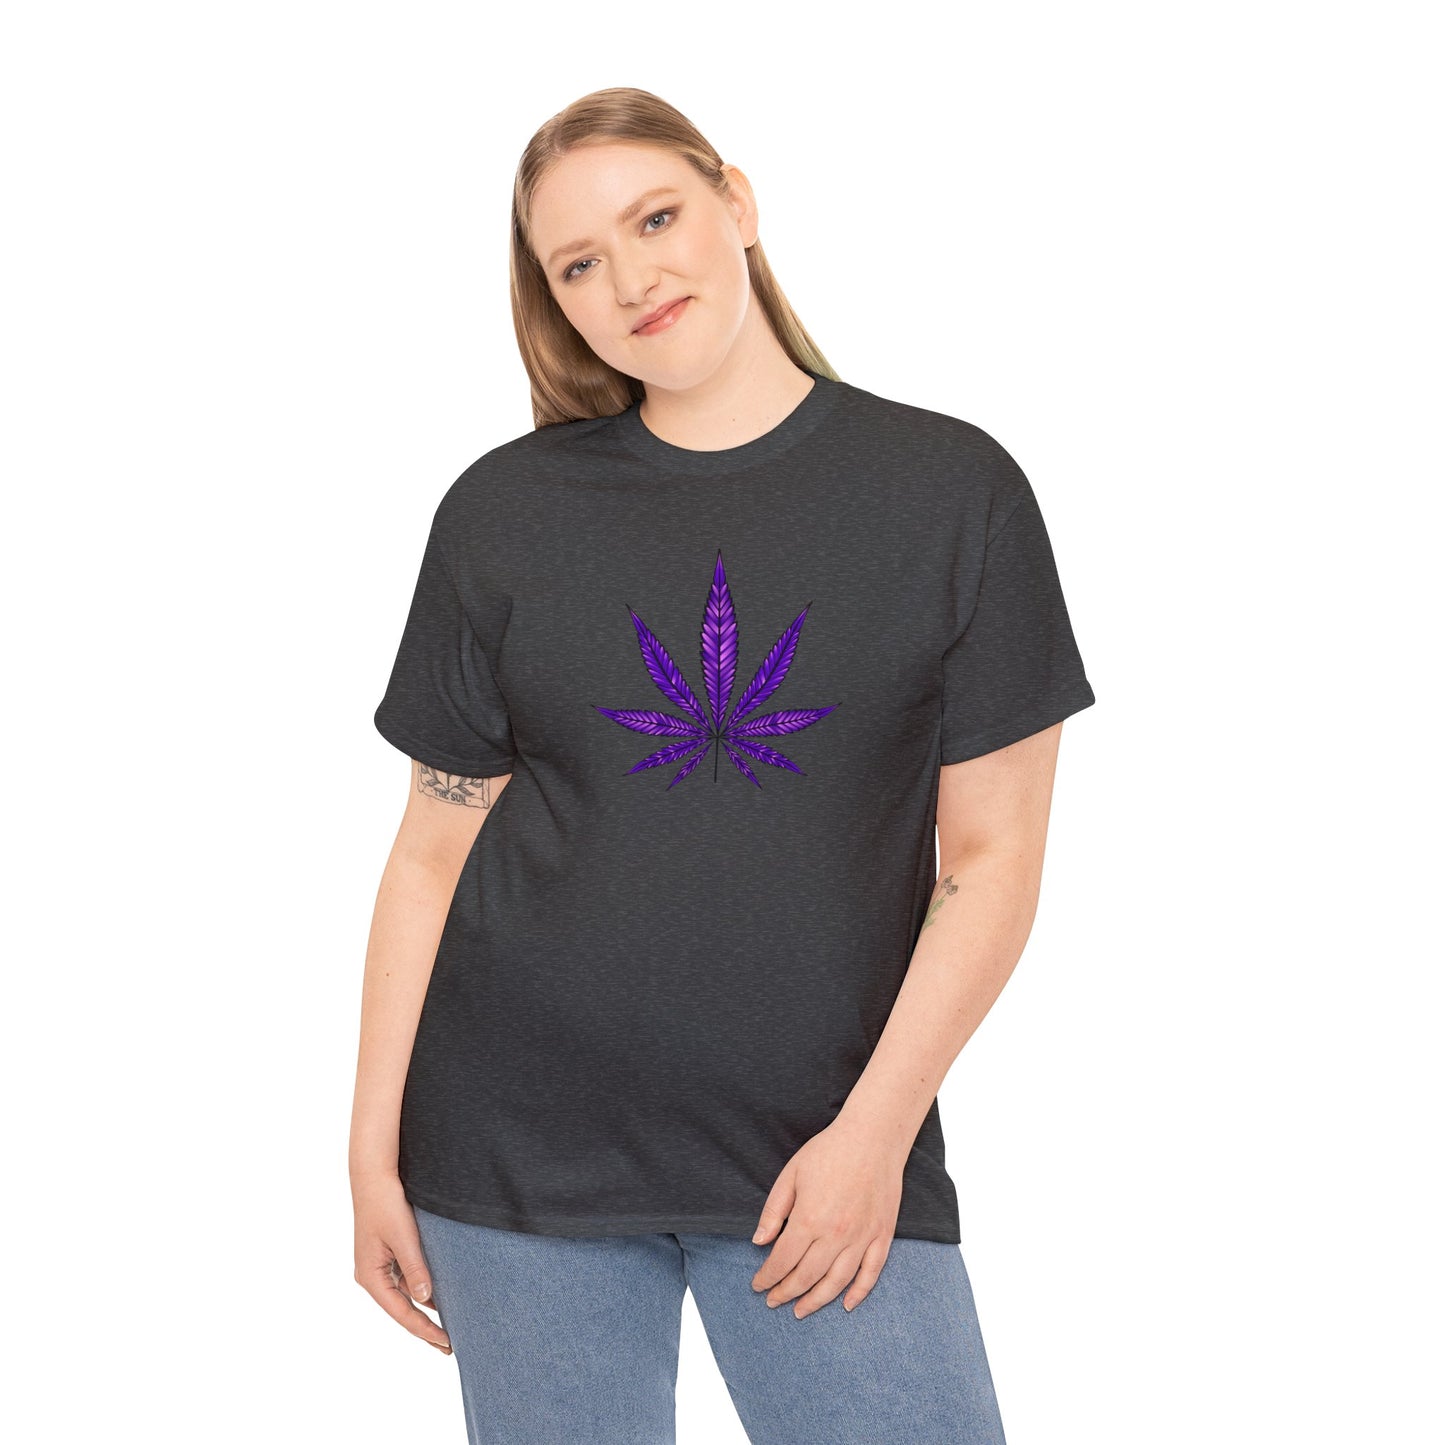 A woman wearing a vibrant Purple Cannabis Leaf Tee.